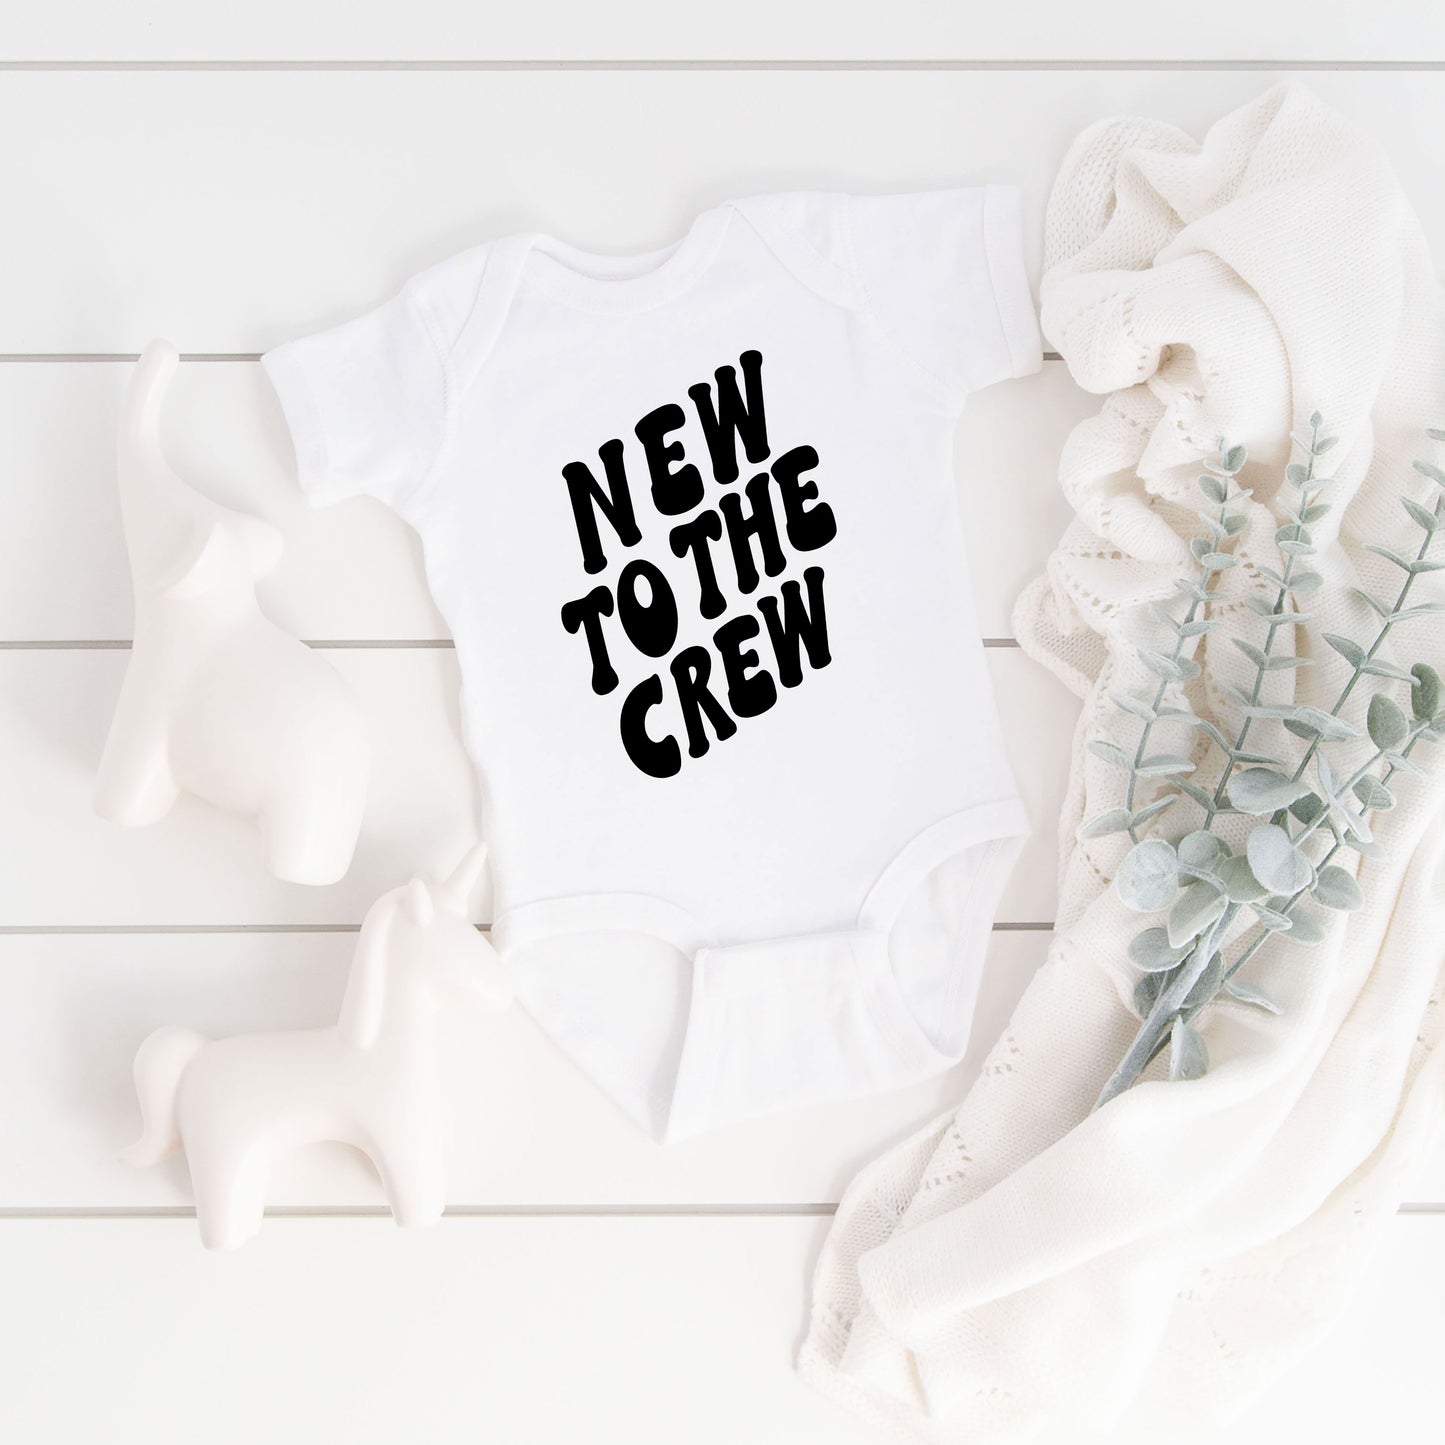 New To The Crew | Baby Graphic Short Sleeve Onesie